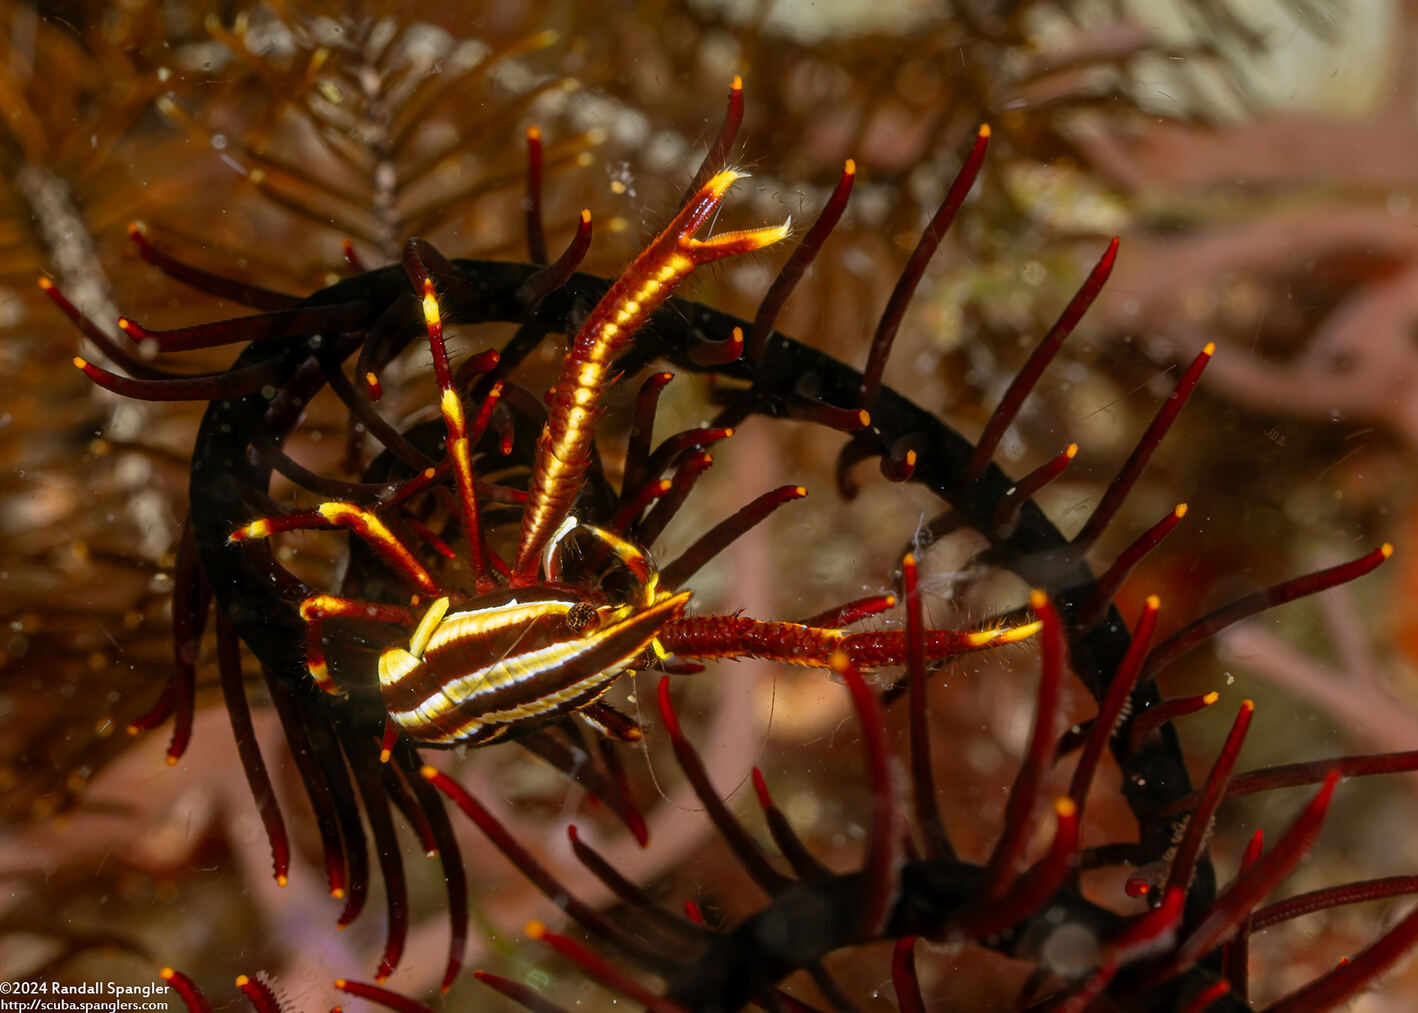 Allogalathea elegans (Elegant Crinoid Squat Lobster)